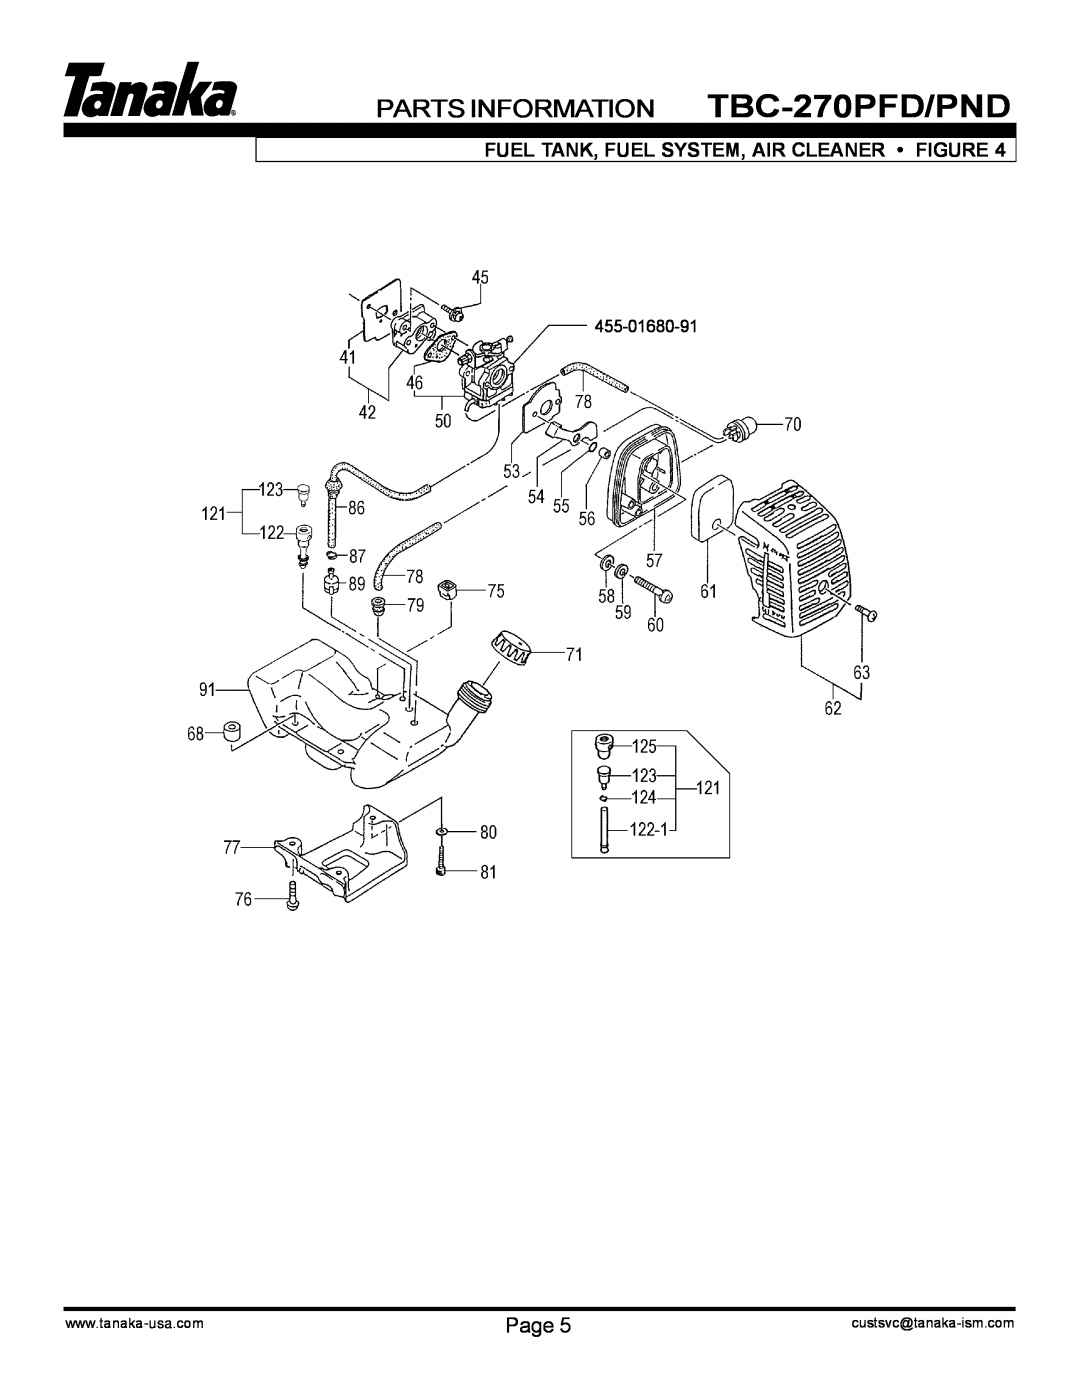 Tanaka TBC-270PND/PFD manual PARTS INFORMATION TBC-270PFD/PND, Page, Fuel Tank, Fuel System, Air Cleaner Figure 